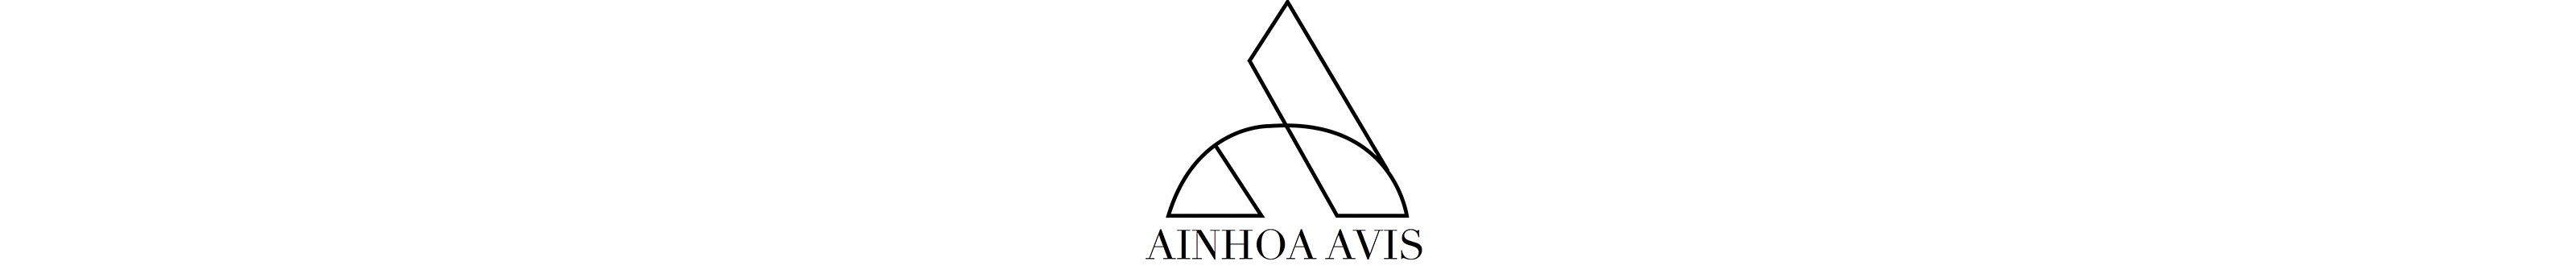 Баннер профиля Ainhoa Avis